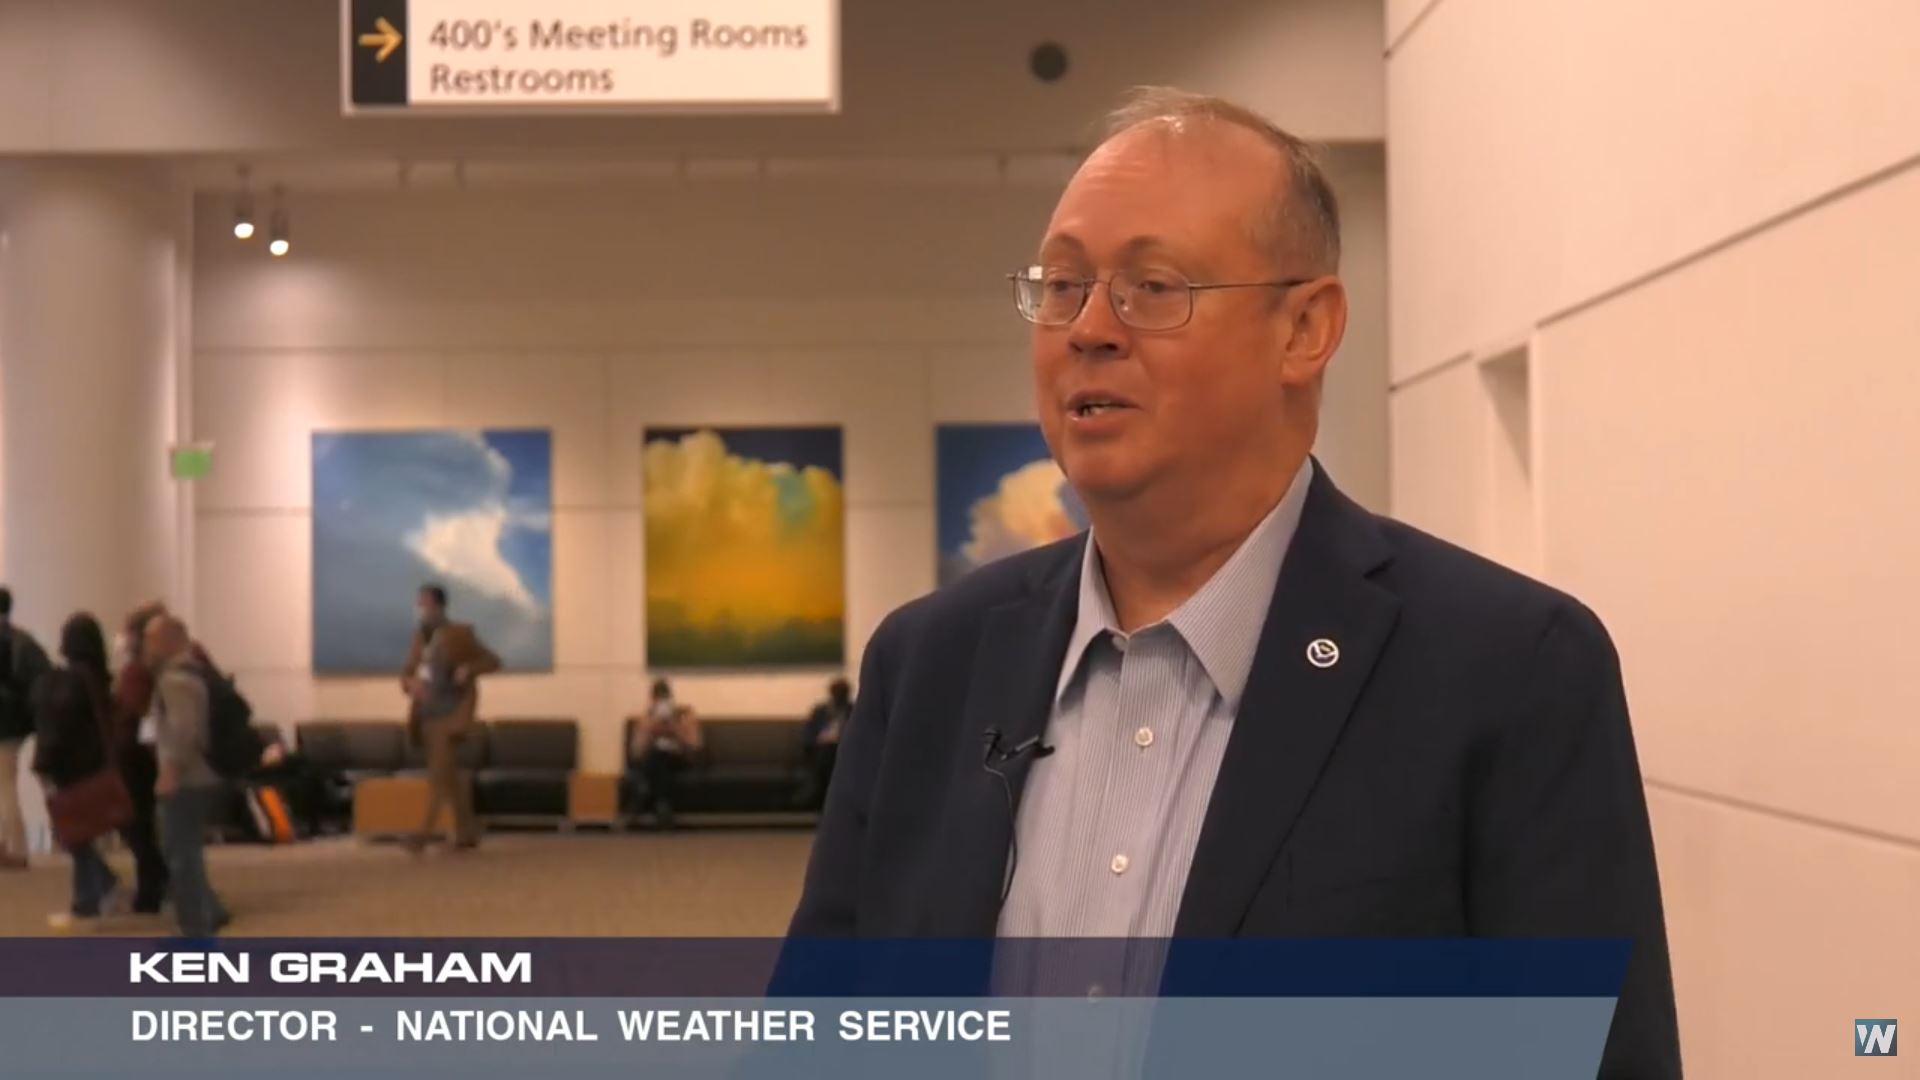 Interview: New NWS Director Ken Graham Speaks With WeatherNation